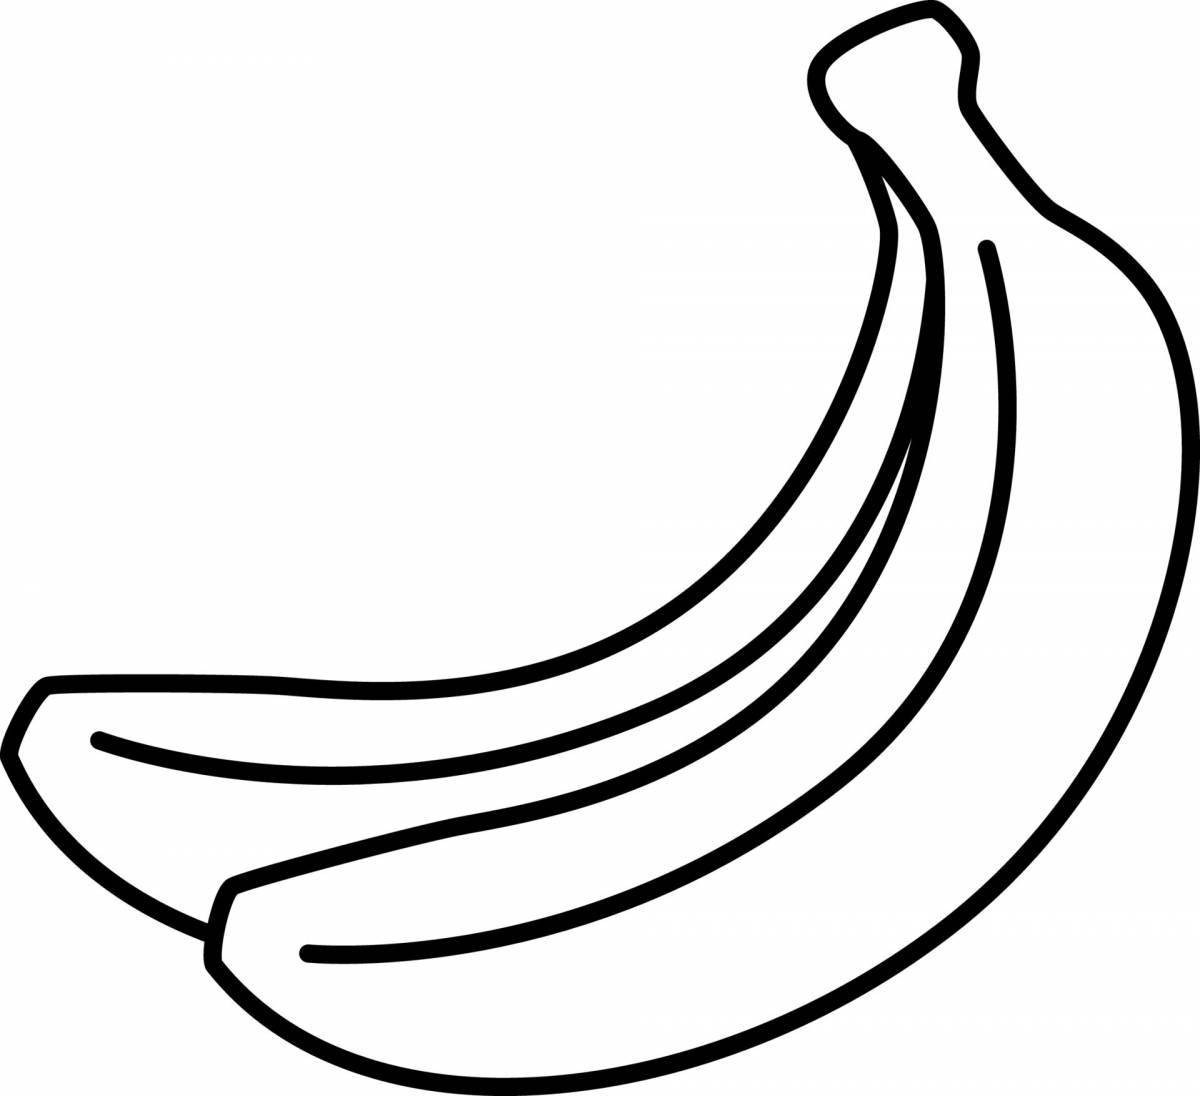 Раскраски онлайн Банан бесплатно